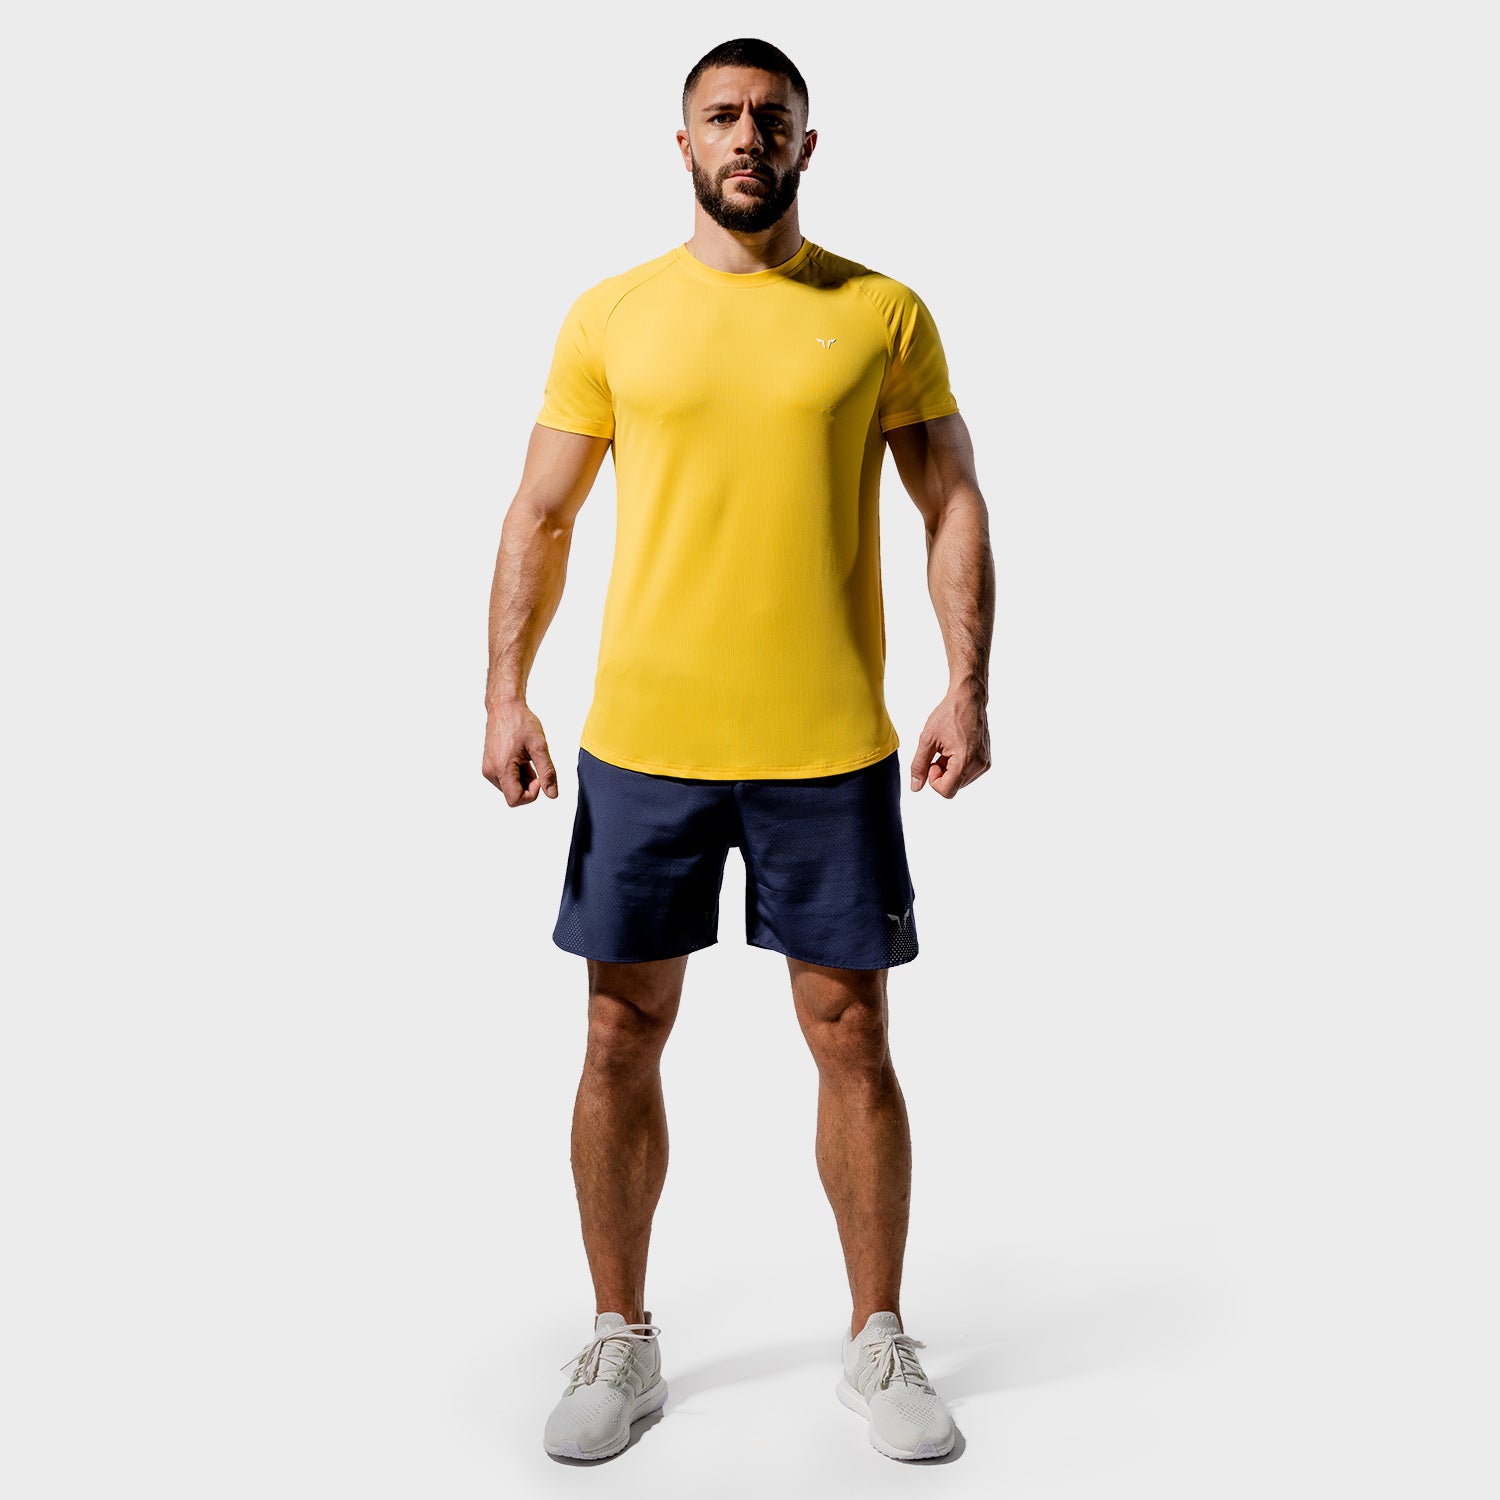 squatwolf-gym-wear-core-mesh-tee-yellow-workout-shirts-for-men